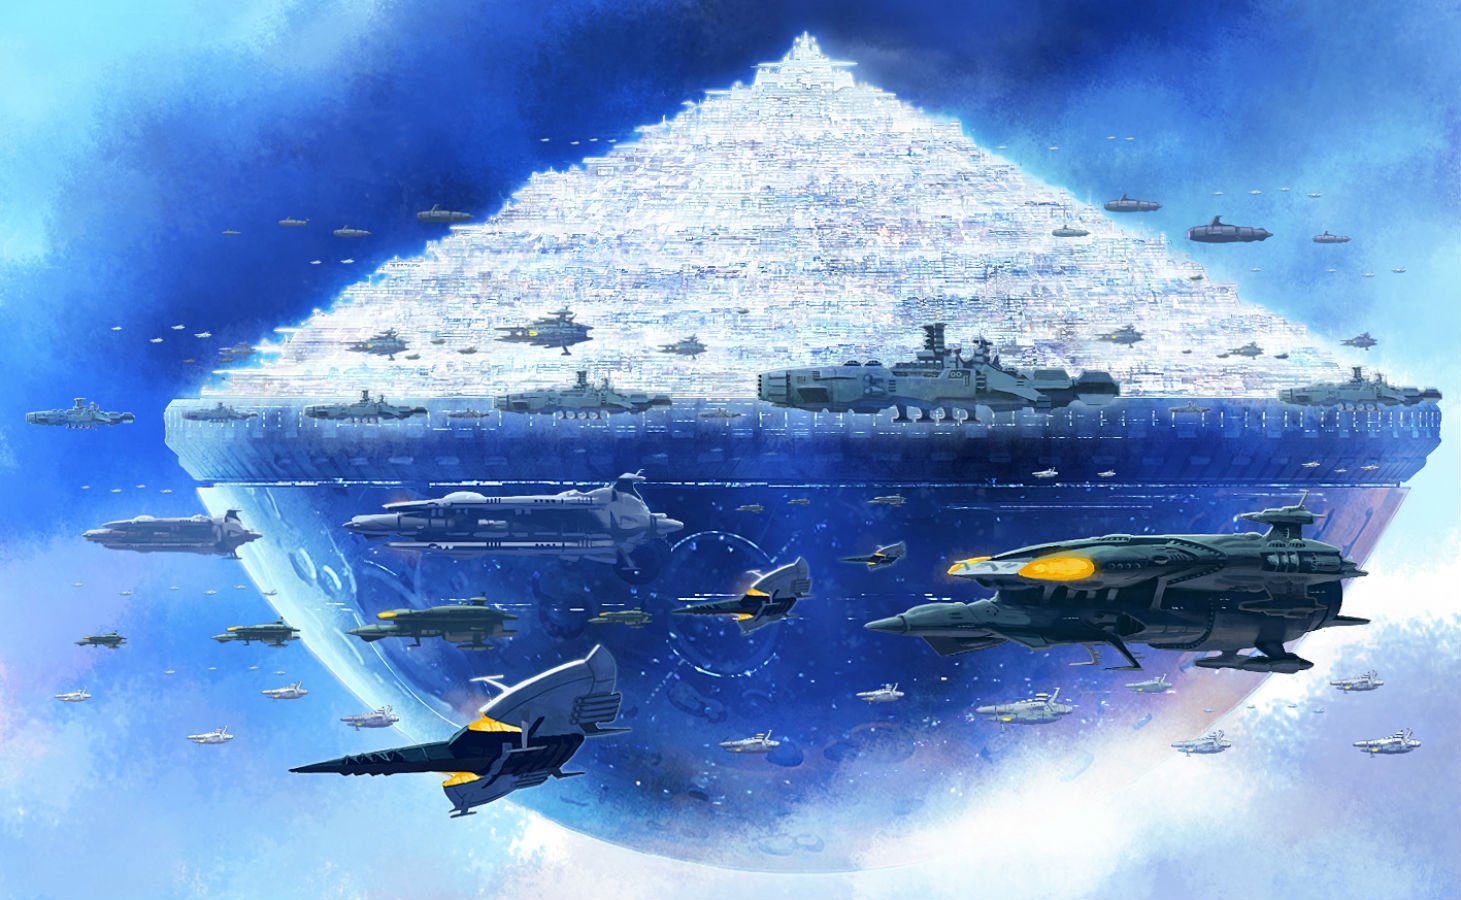 Space Battleship Yamato Wallpaper